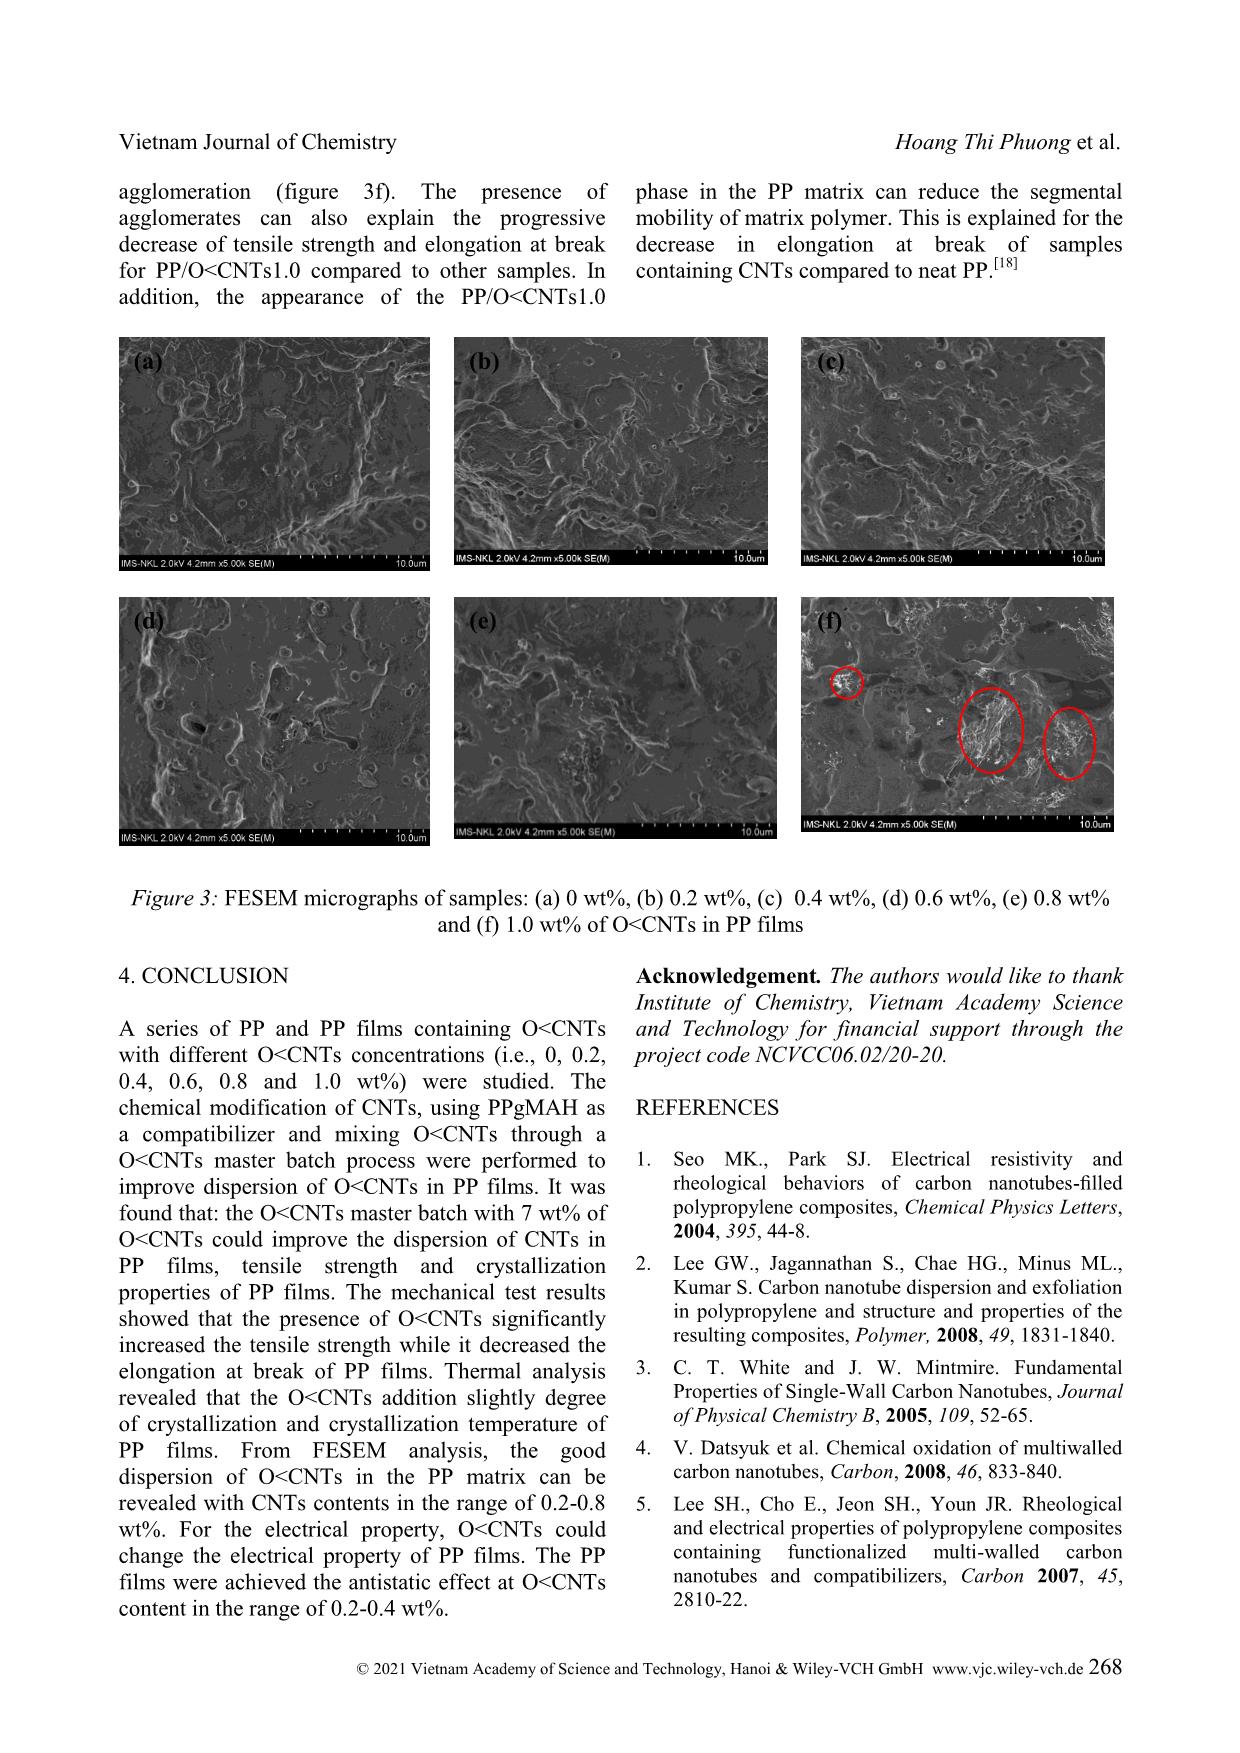 Effect of epoxydized carbon nanotube master batch on polypropylene film properties trang 6